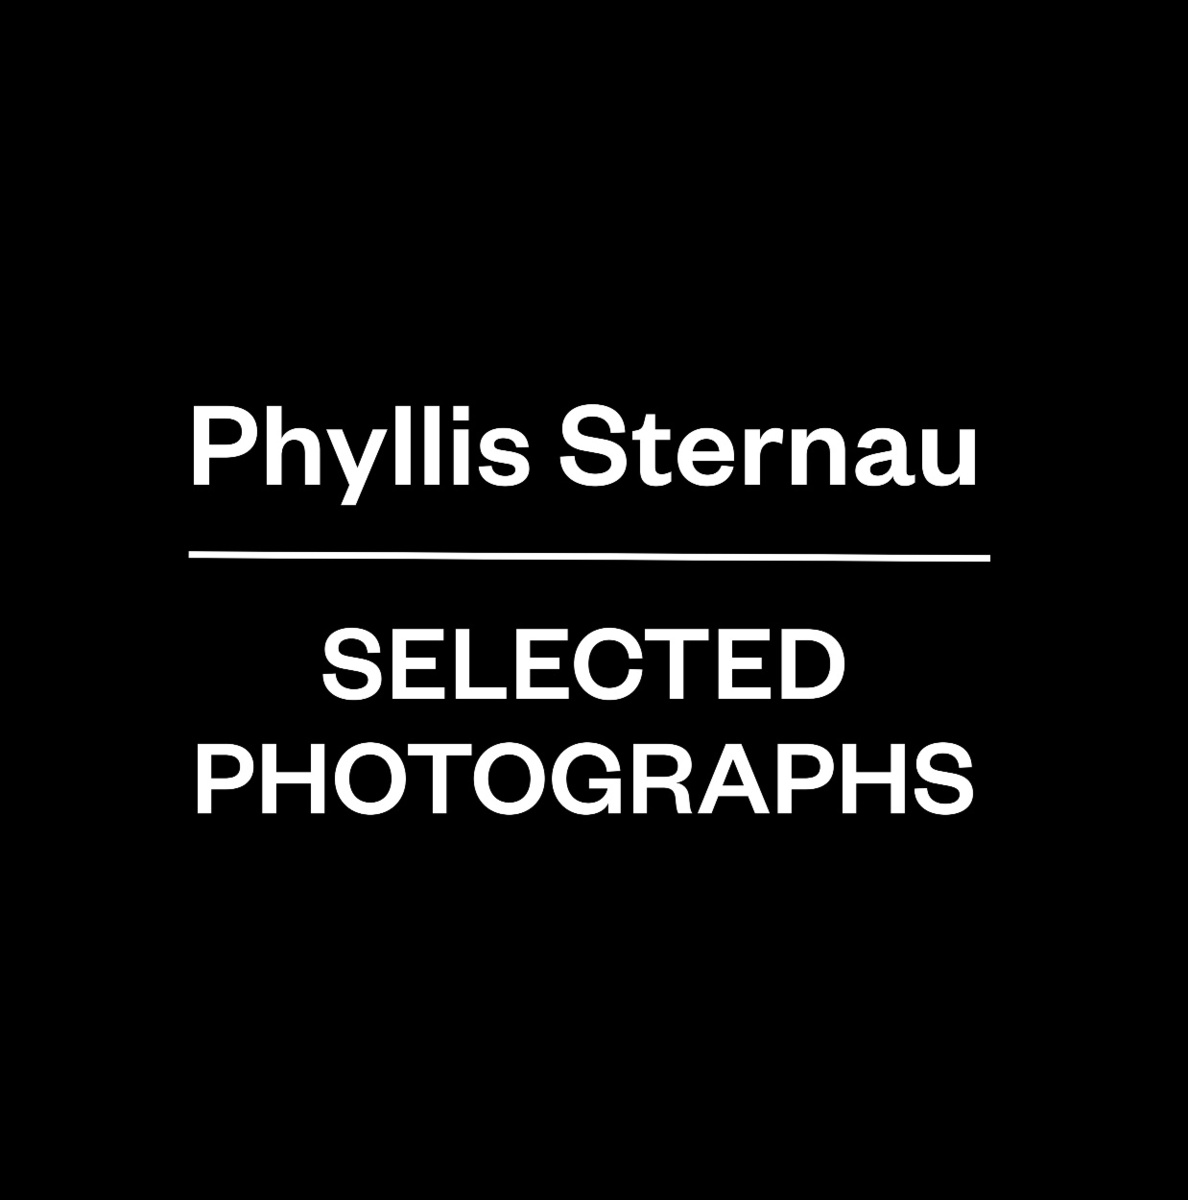 Phyllis Sternau Selected Photographs 10x10